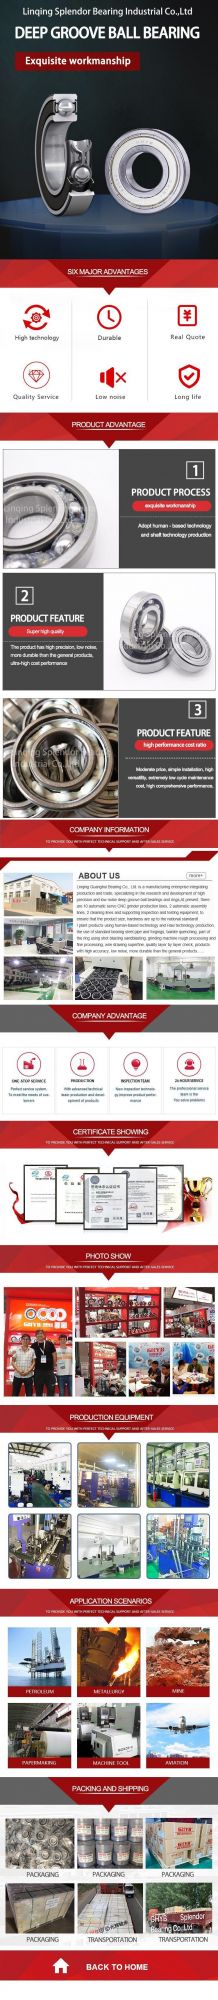 China Factory Distributor Supplier of Deep Groove Ball Bearings for Motors, Compressors, Alternators 6312-2rz/P6/Z2V2